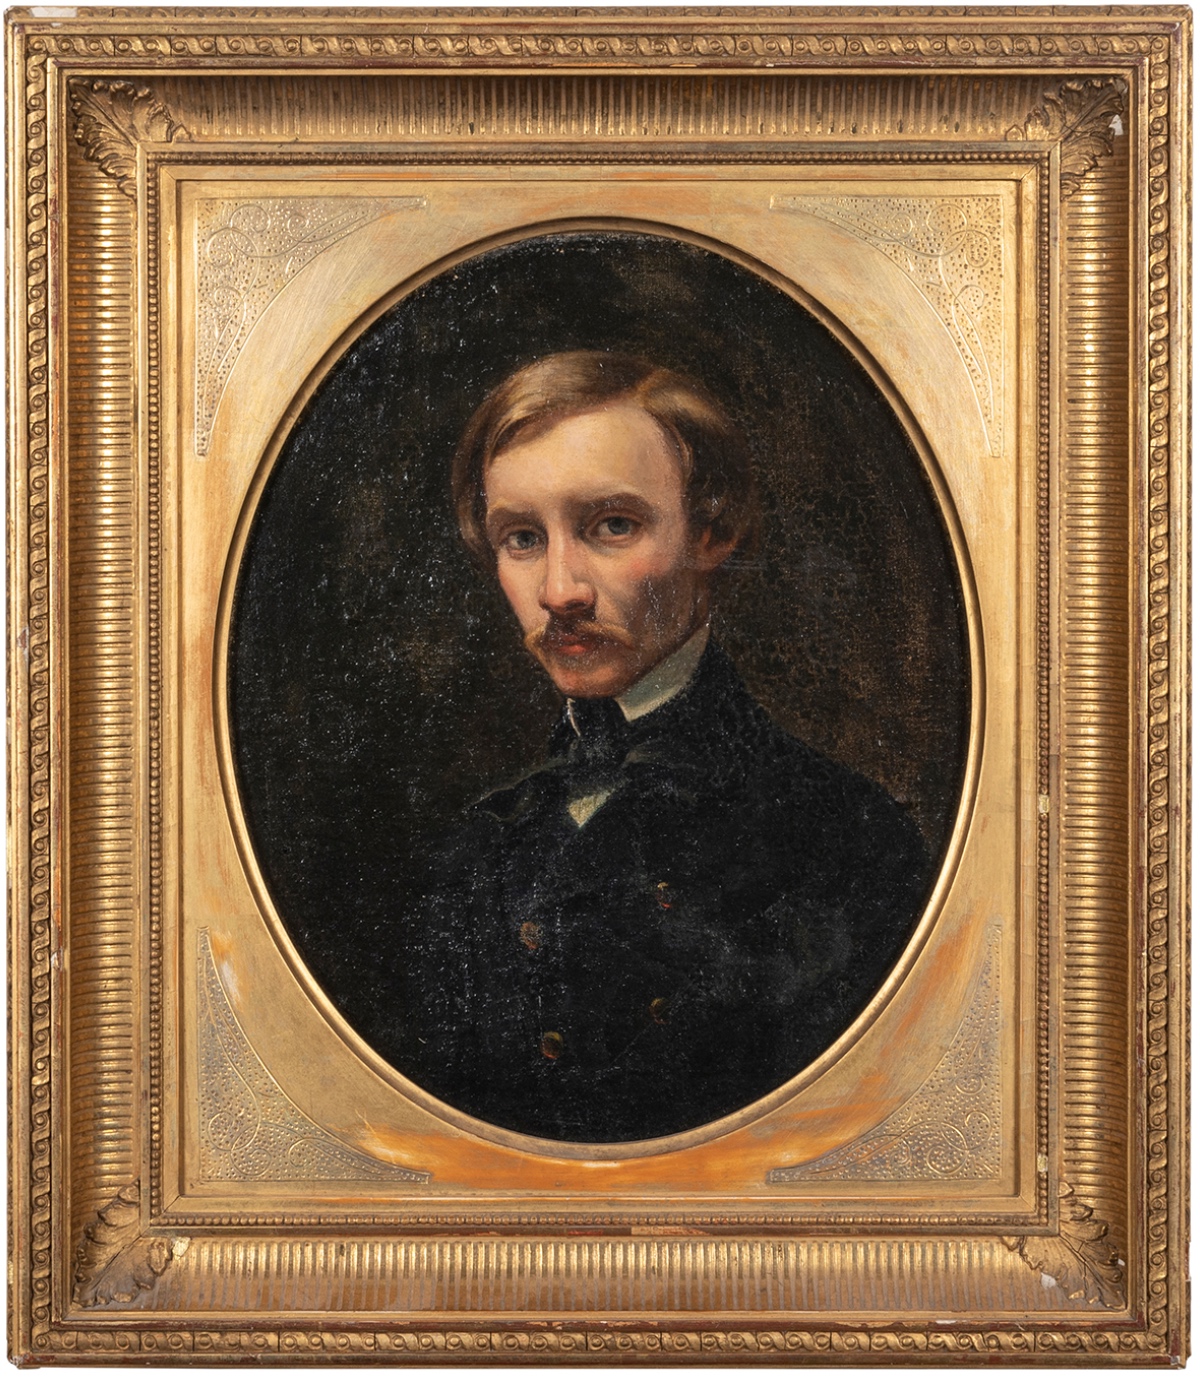 Circa-1870 portrait of Robert Louis Stevenson by William Cosens Way, est. $300-$500